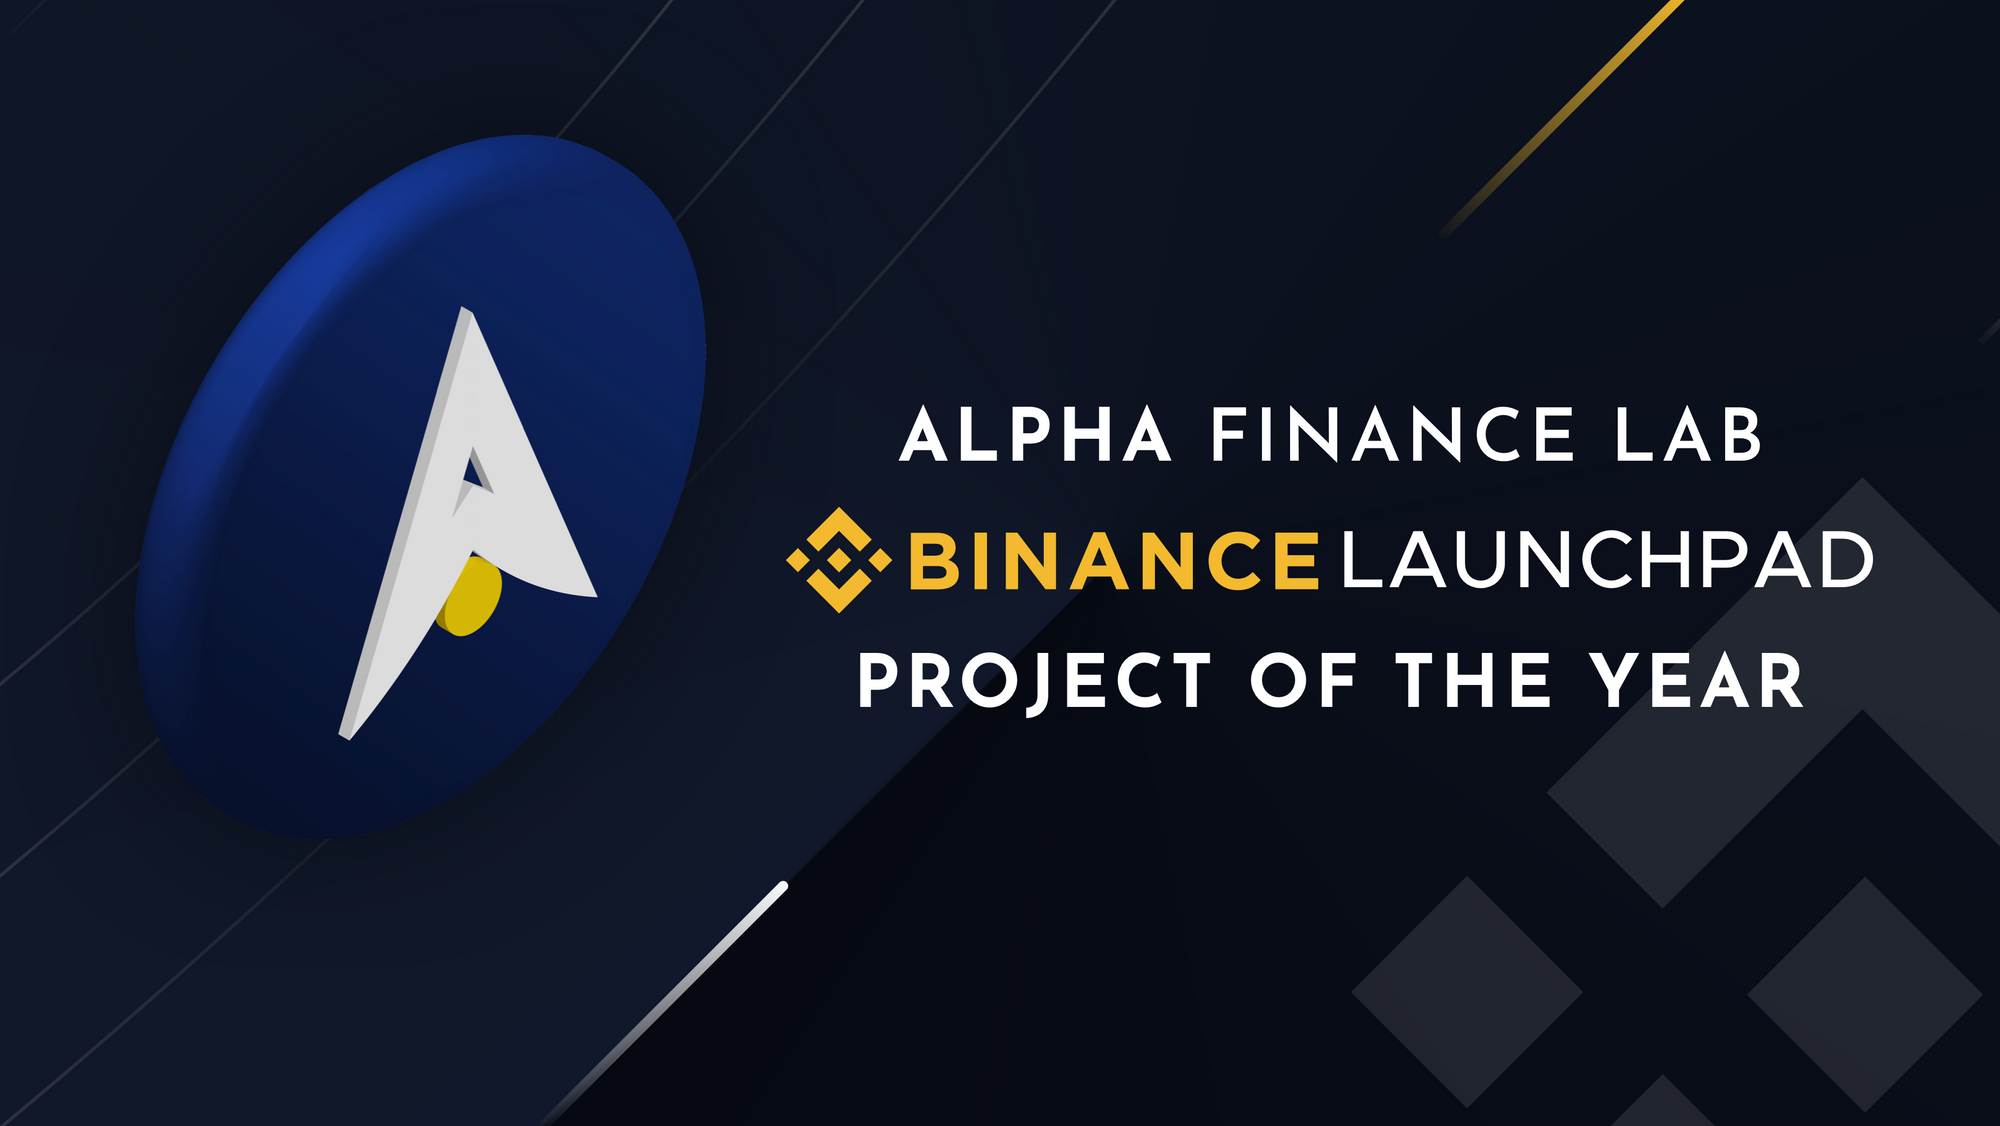 Alpha Finance Lab Won Binance Launchpad Project of the Year
Awards 2021